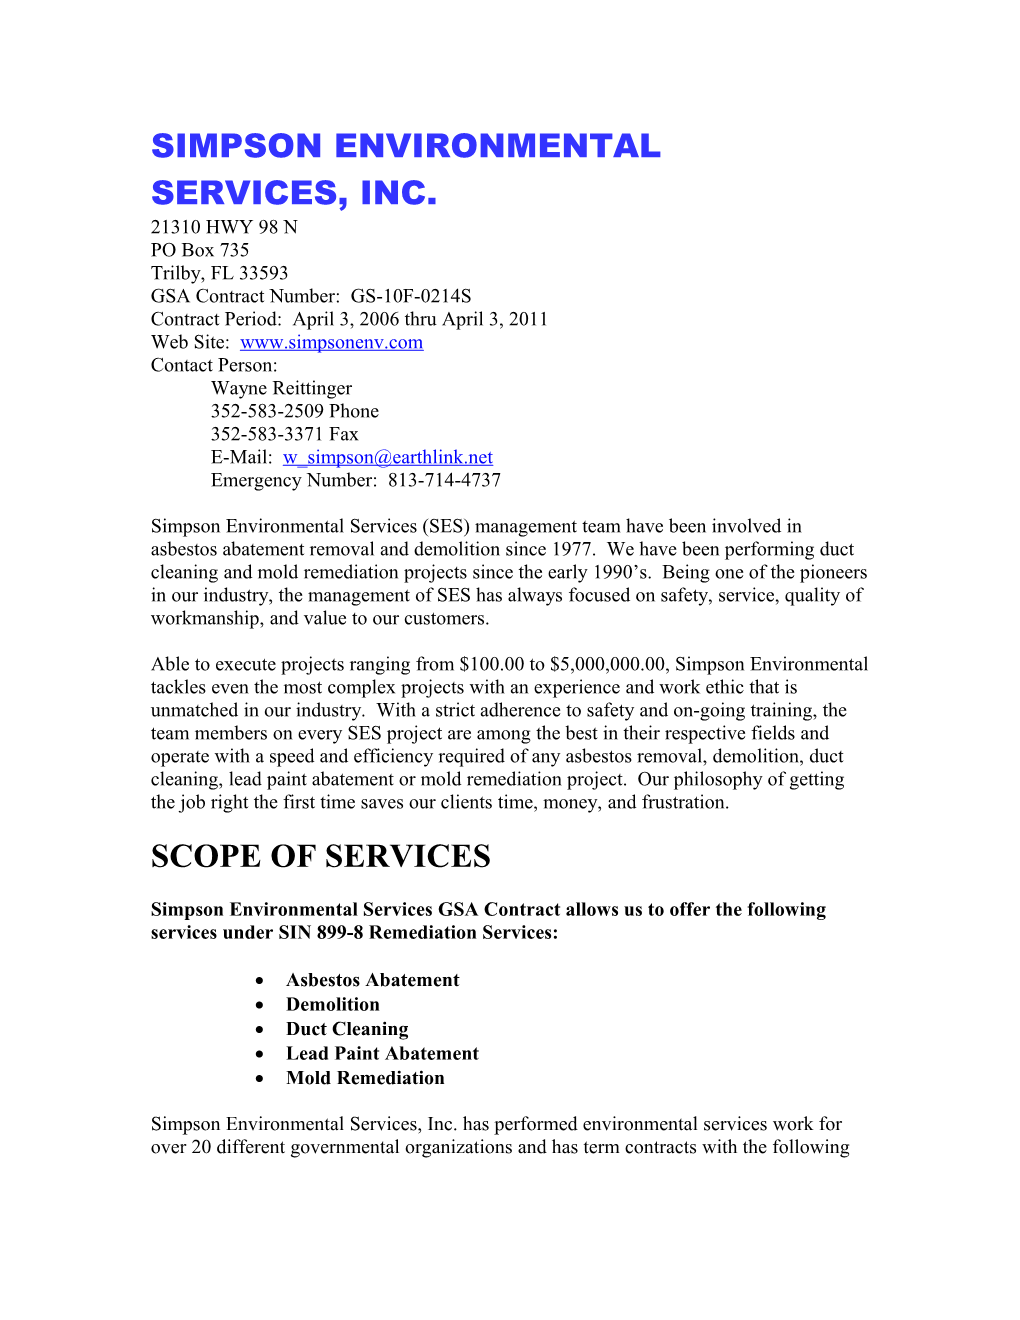 Simpson Environmental Services, Inc